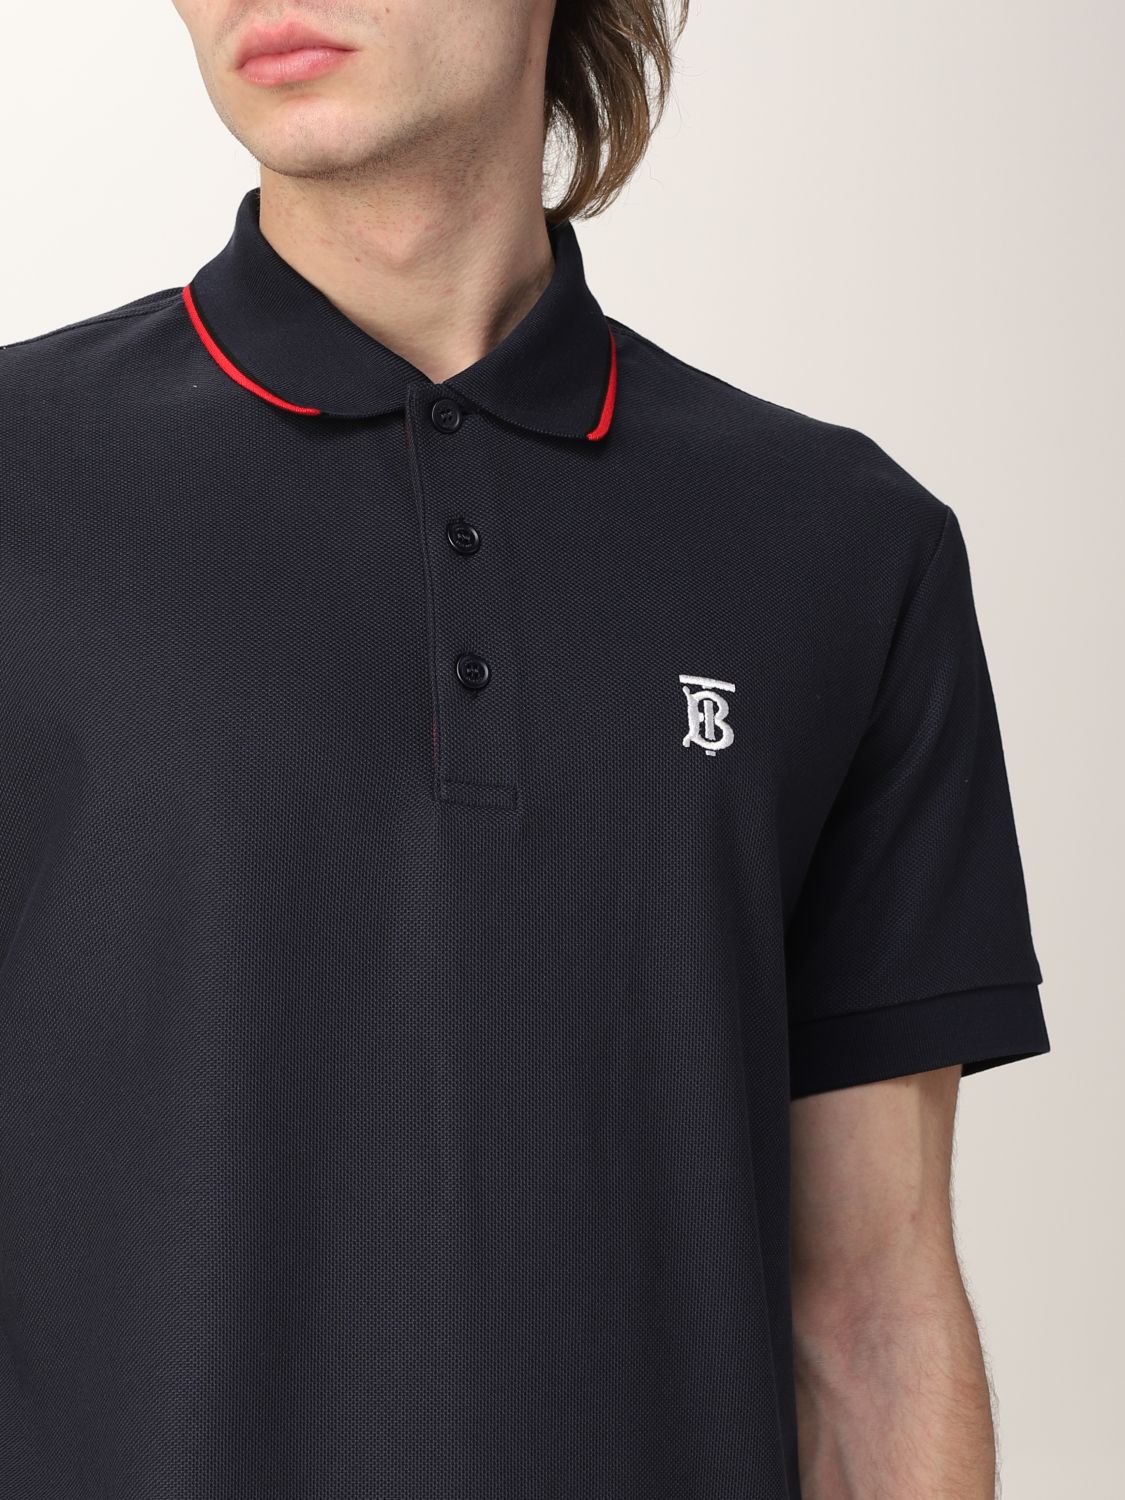 BURBERRY: Walton polo t-shirt with TB monogram - Black | Burberry polo ...